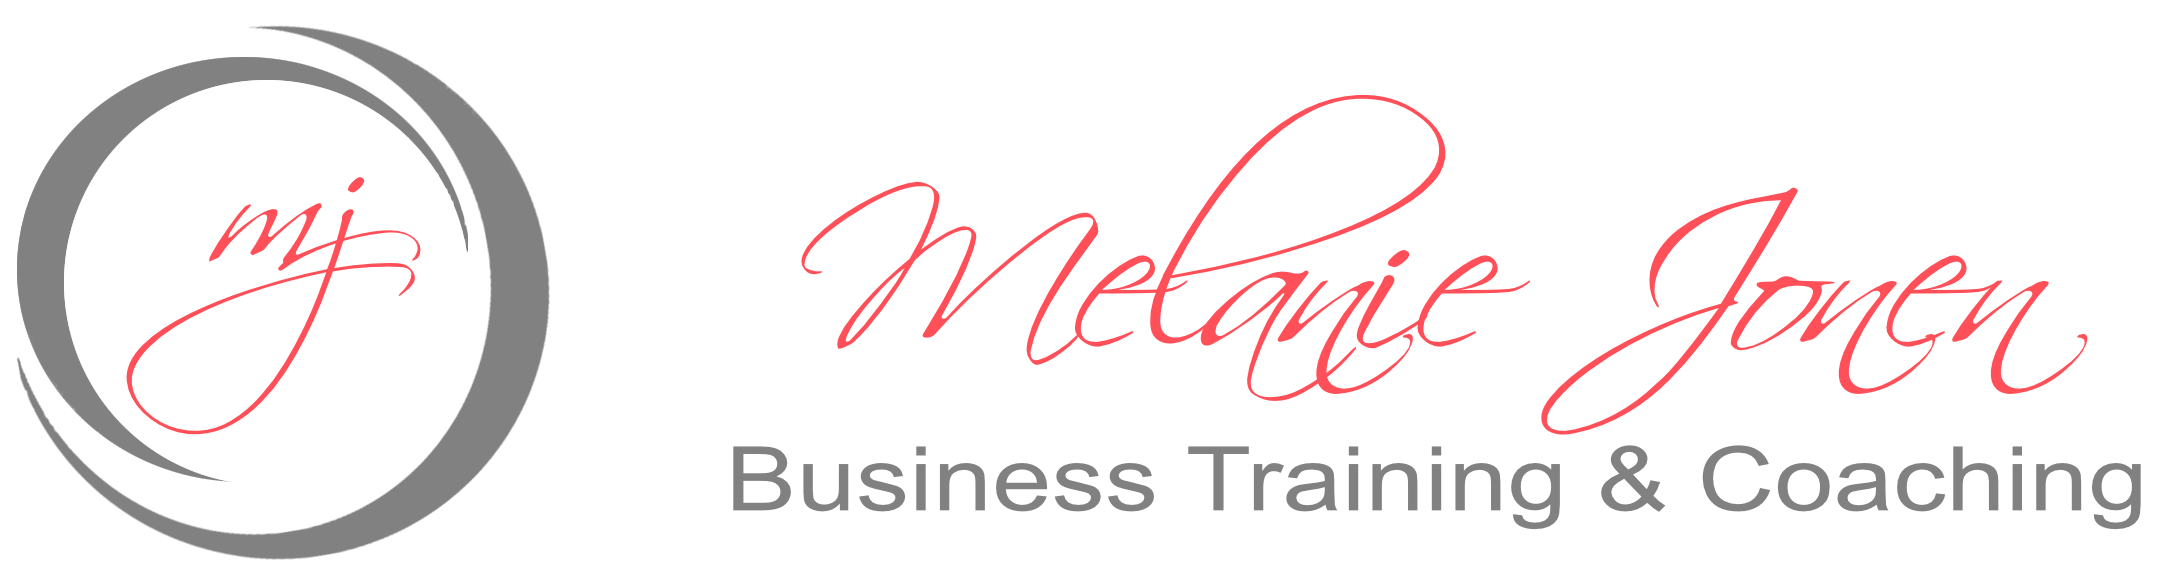 Melanie Jonen Business Training & Coaching